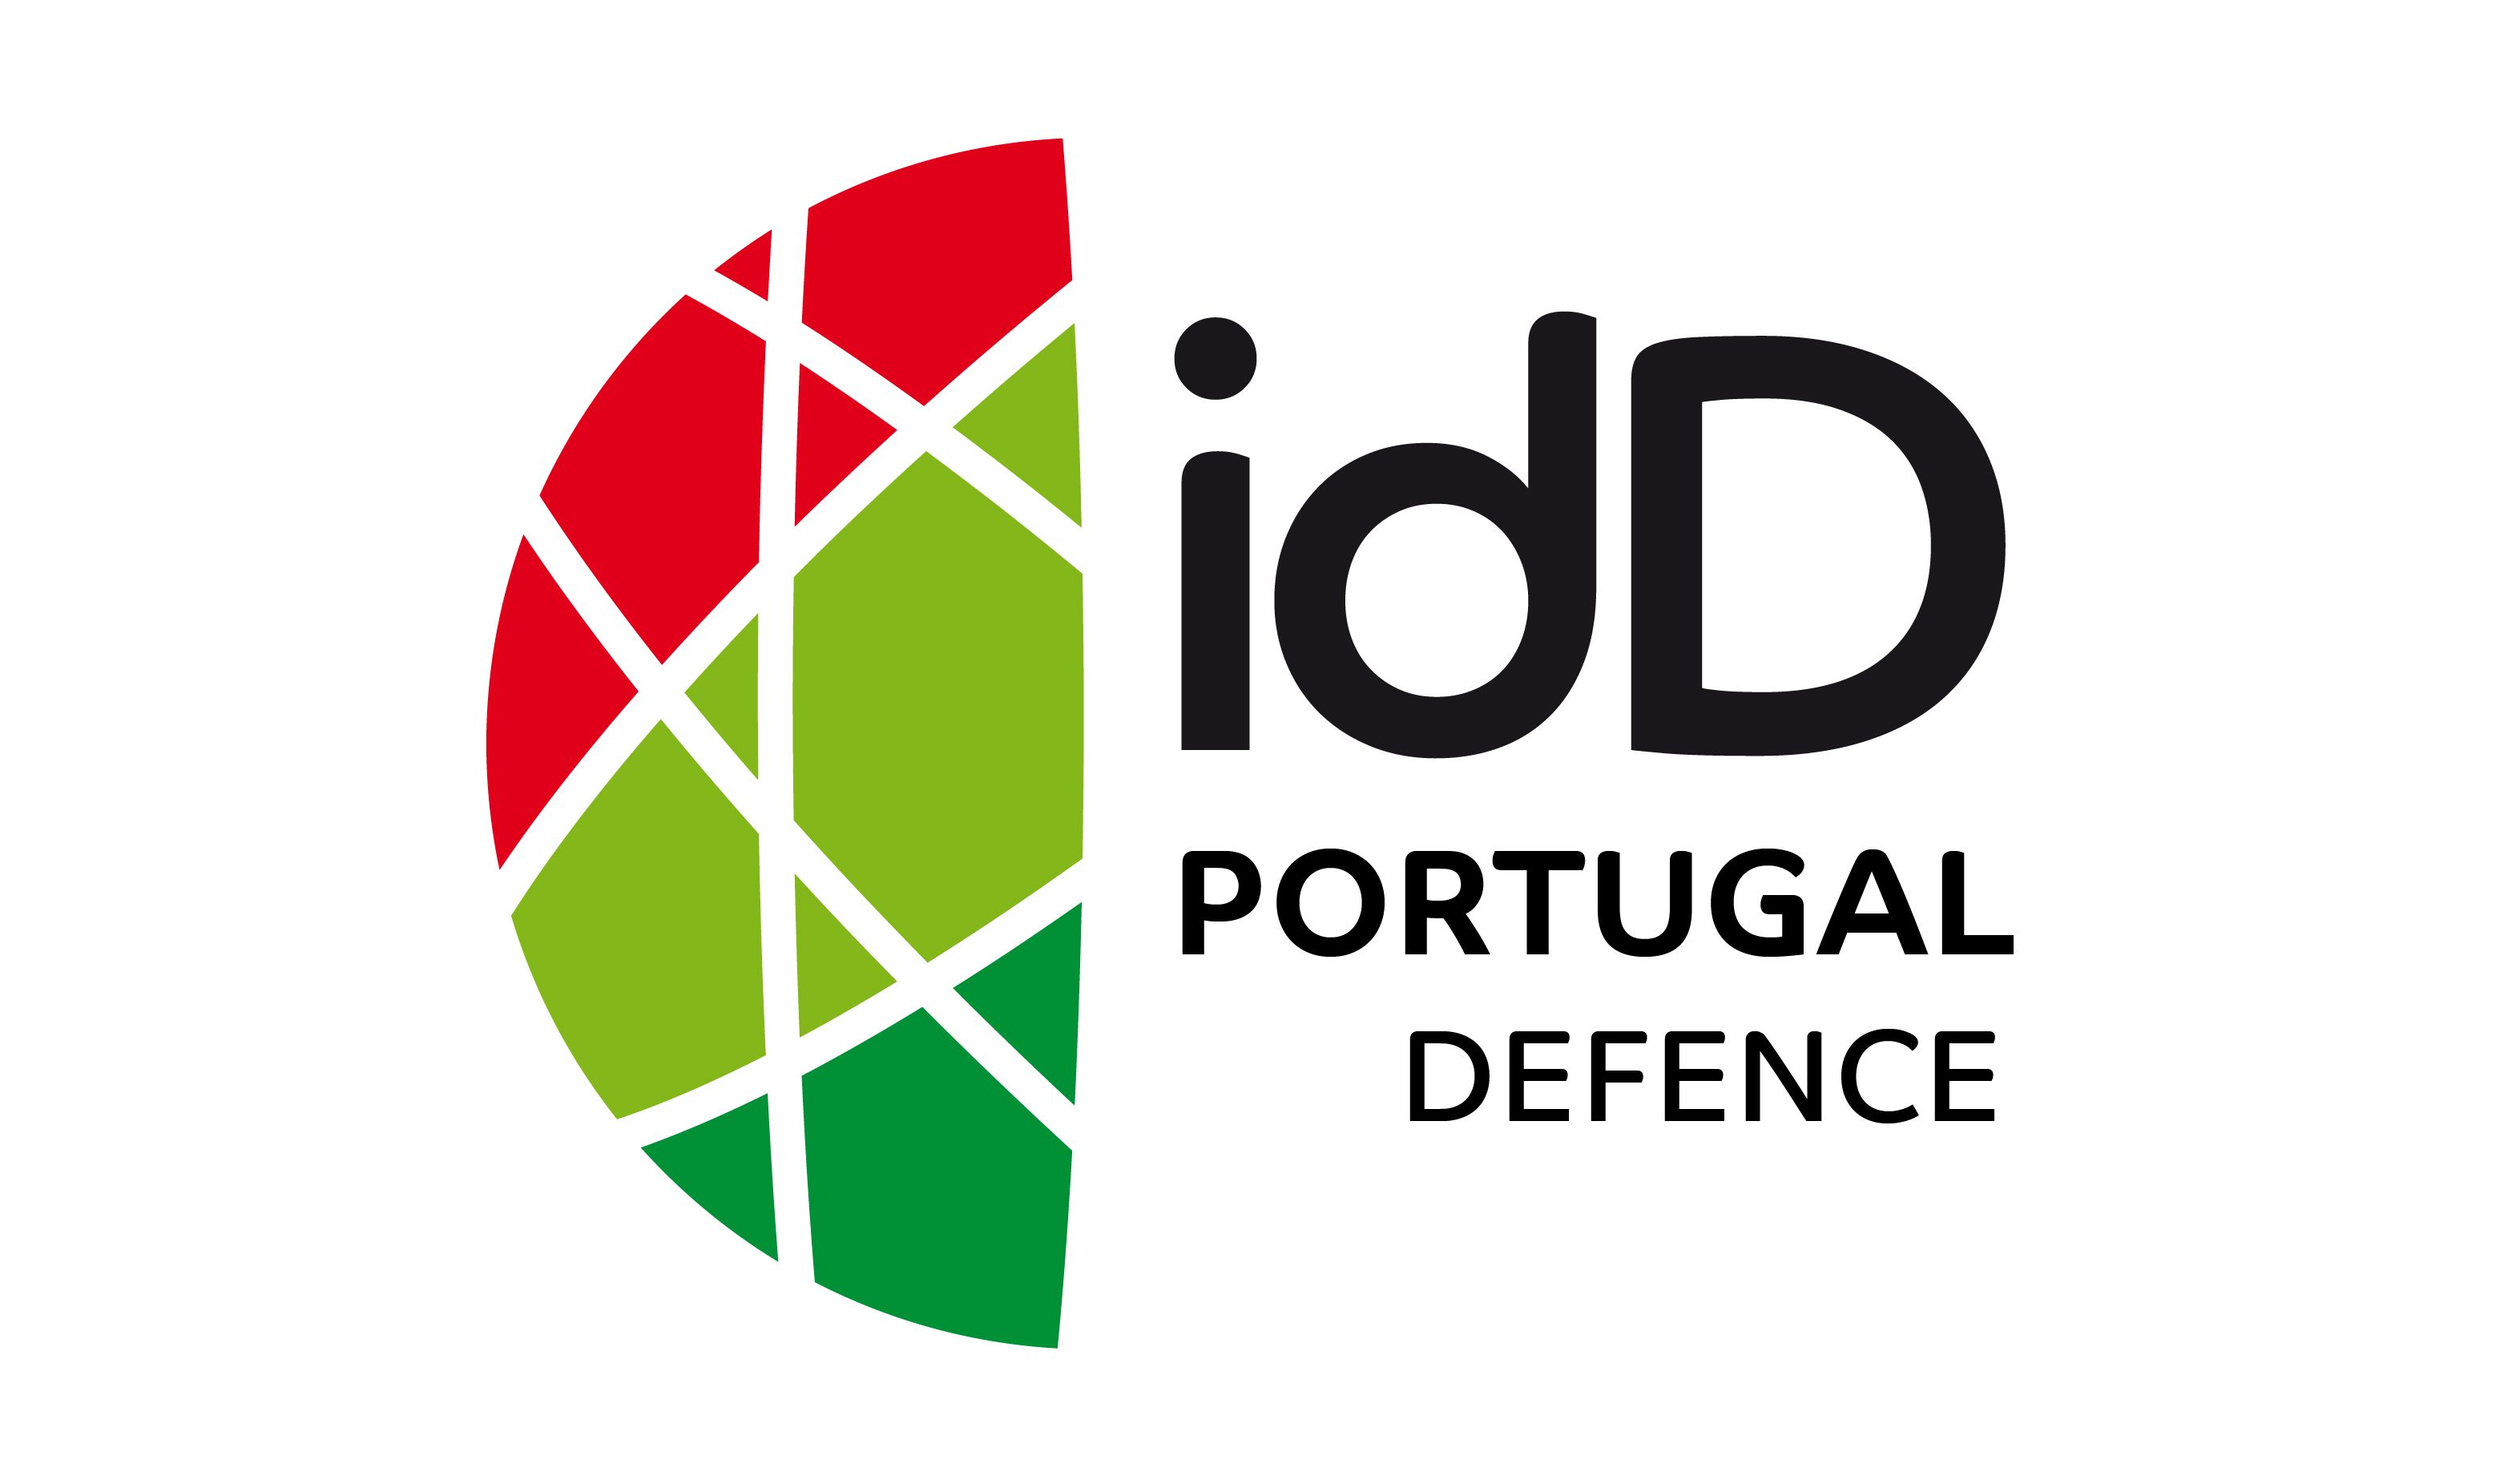 idD Portugal Defence